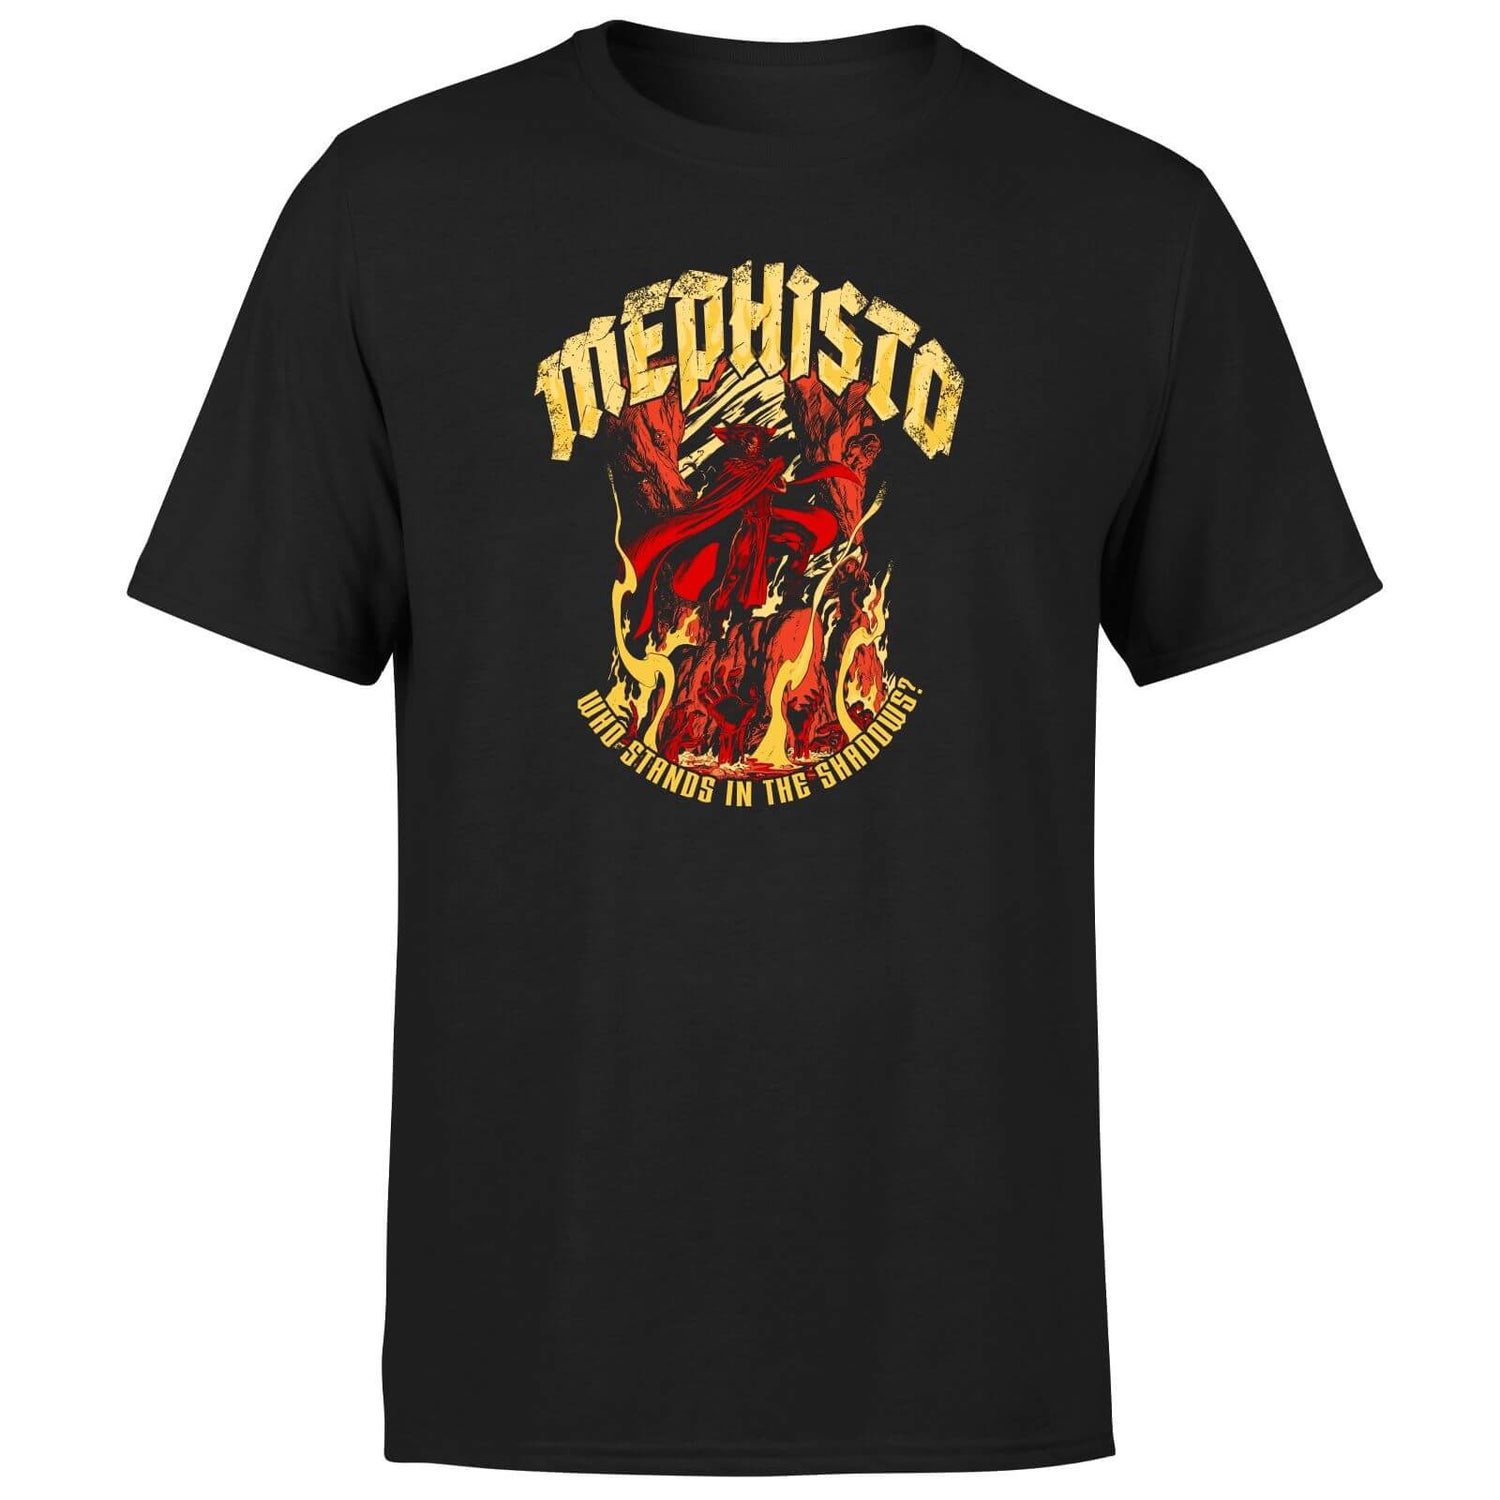 Mephisto Gothic Men's T-Shirt - Black